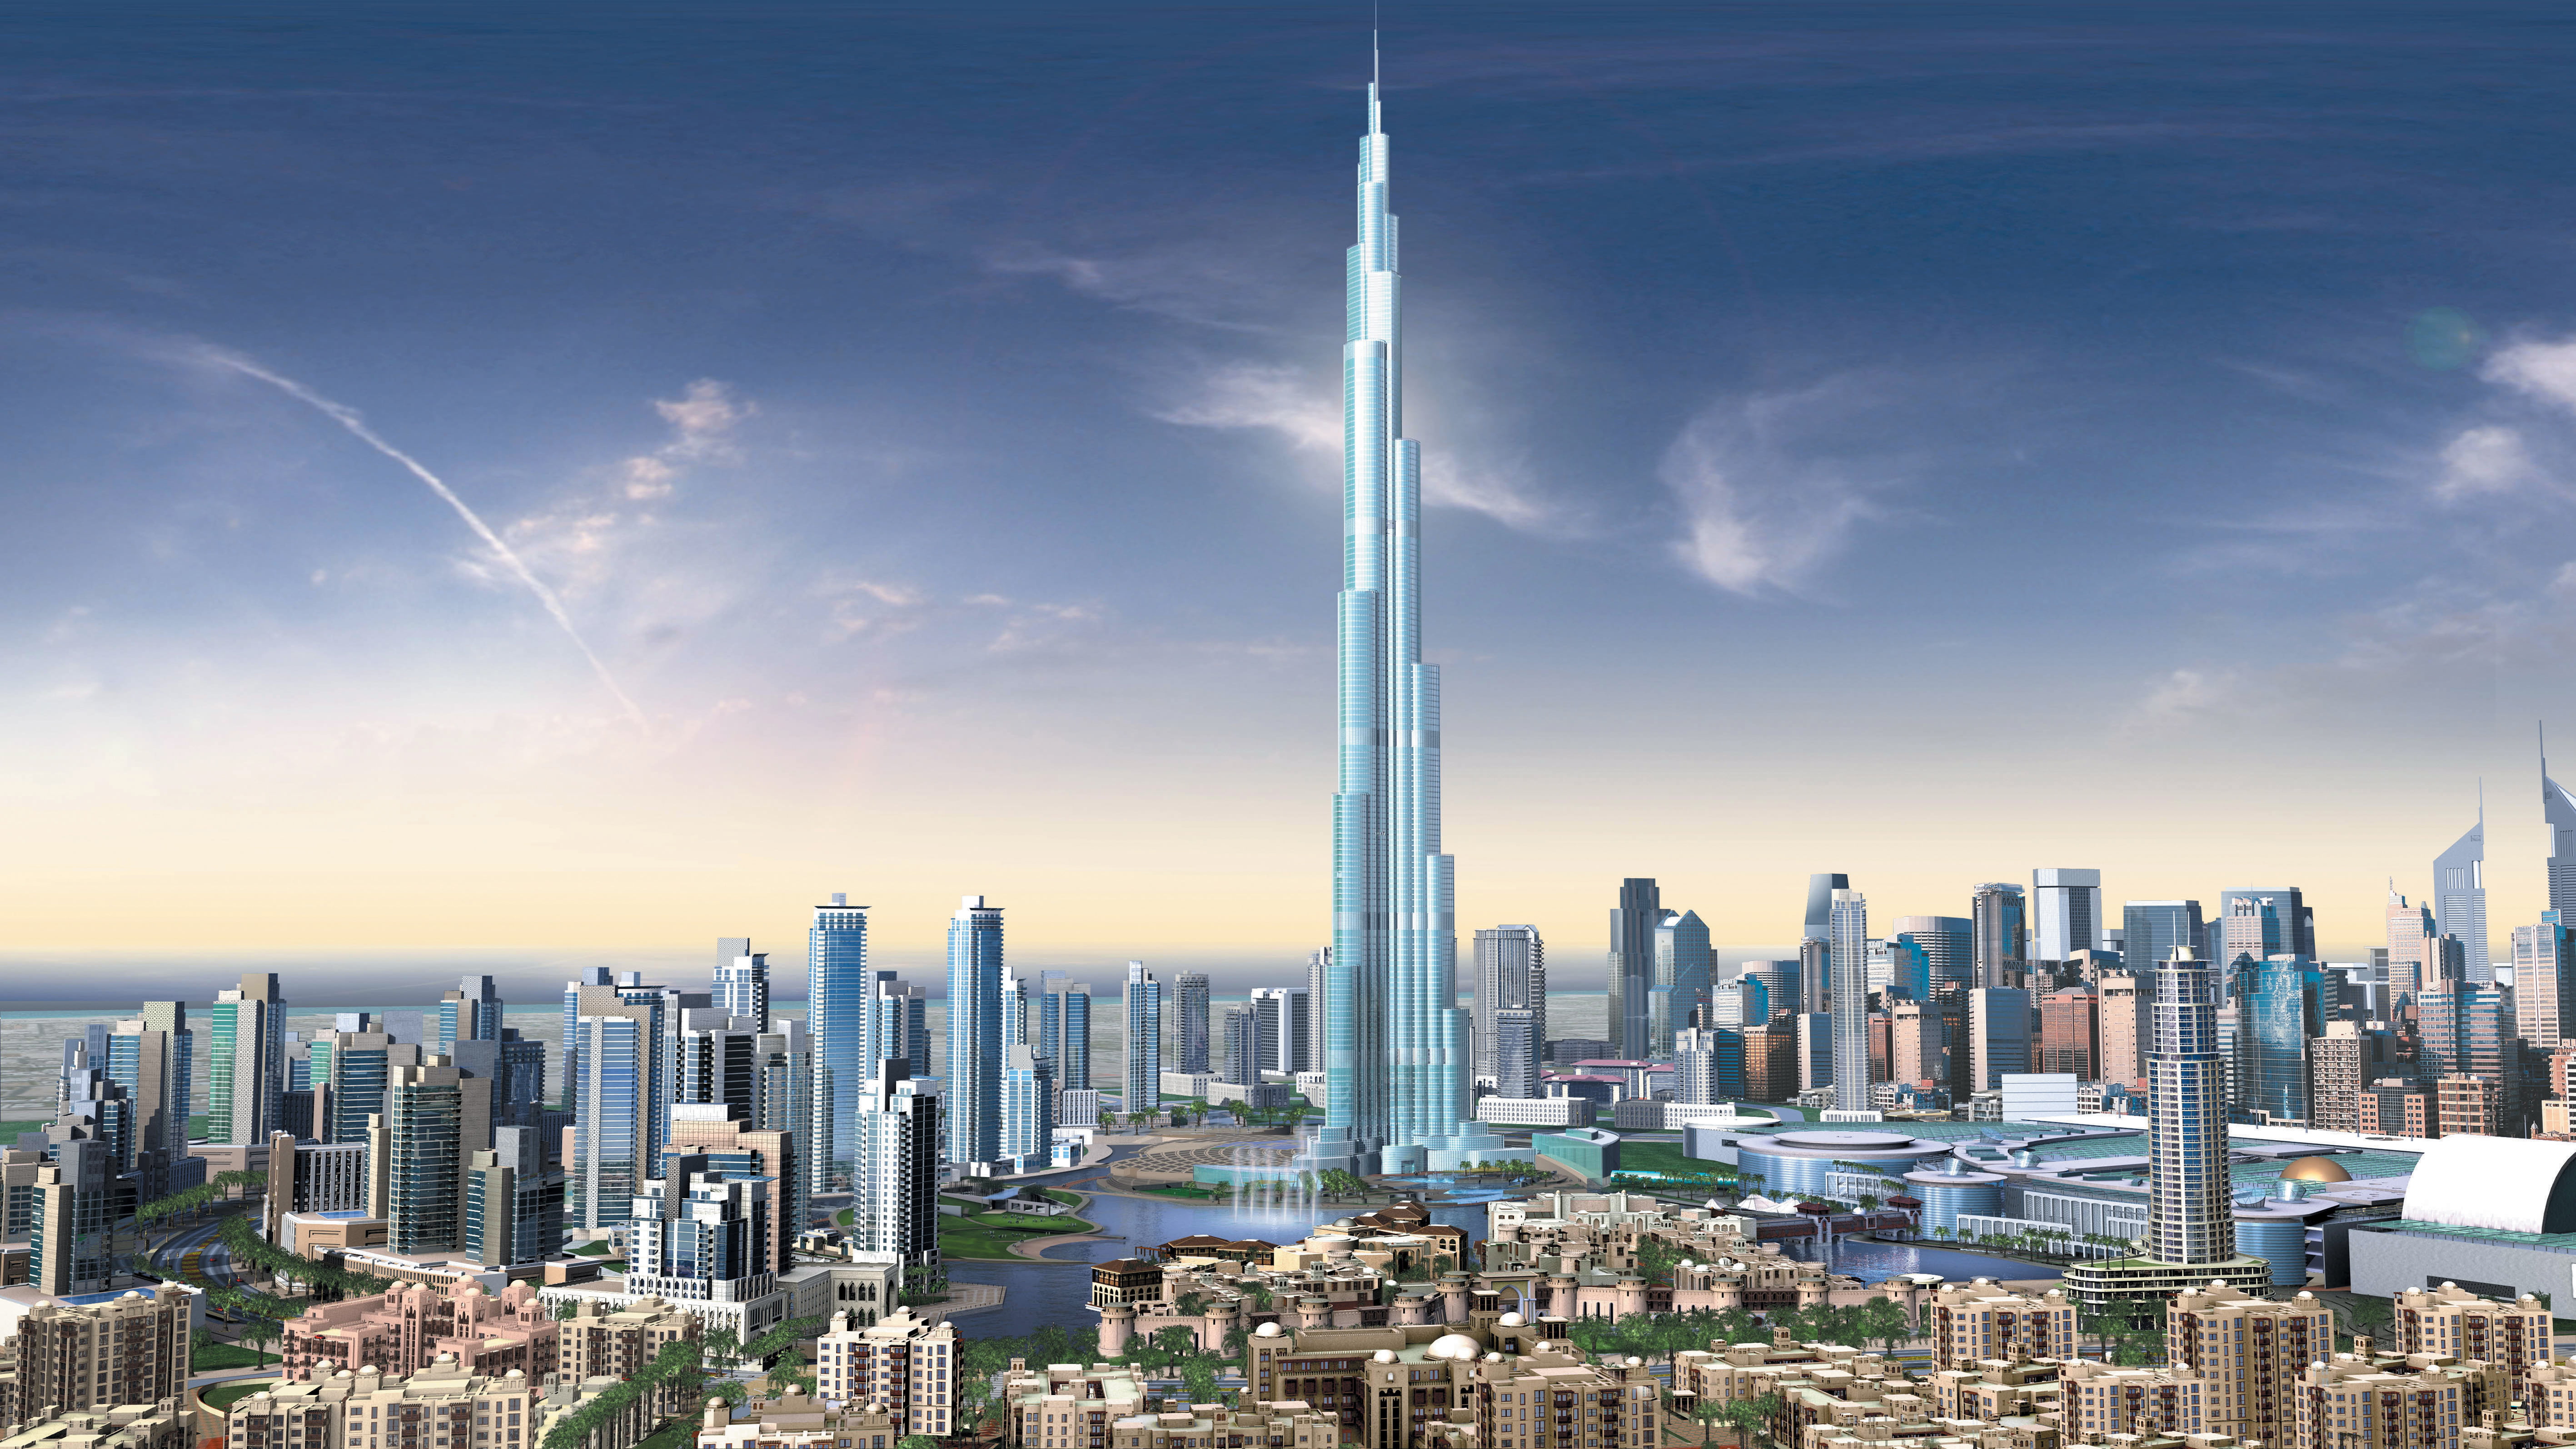 Dubai Burj Khalifa Megatall Skyscraper In Dubai United Arab Emirates Tallest Structure In The World High 829 8 Meters Wallpaper Hd 5669×3189